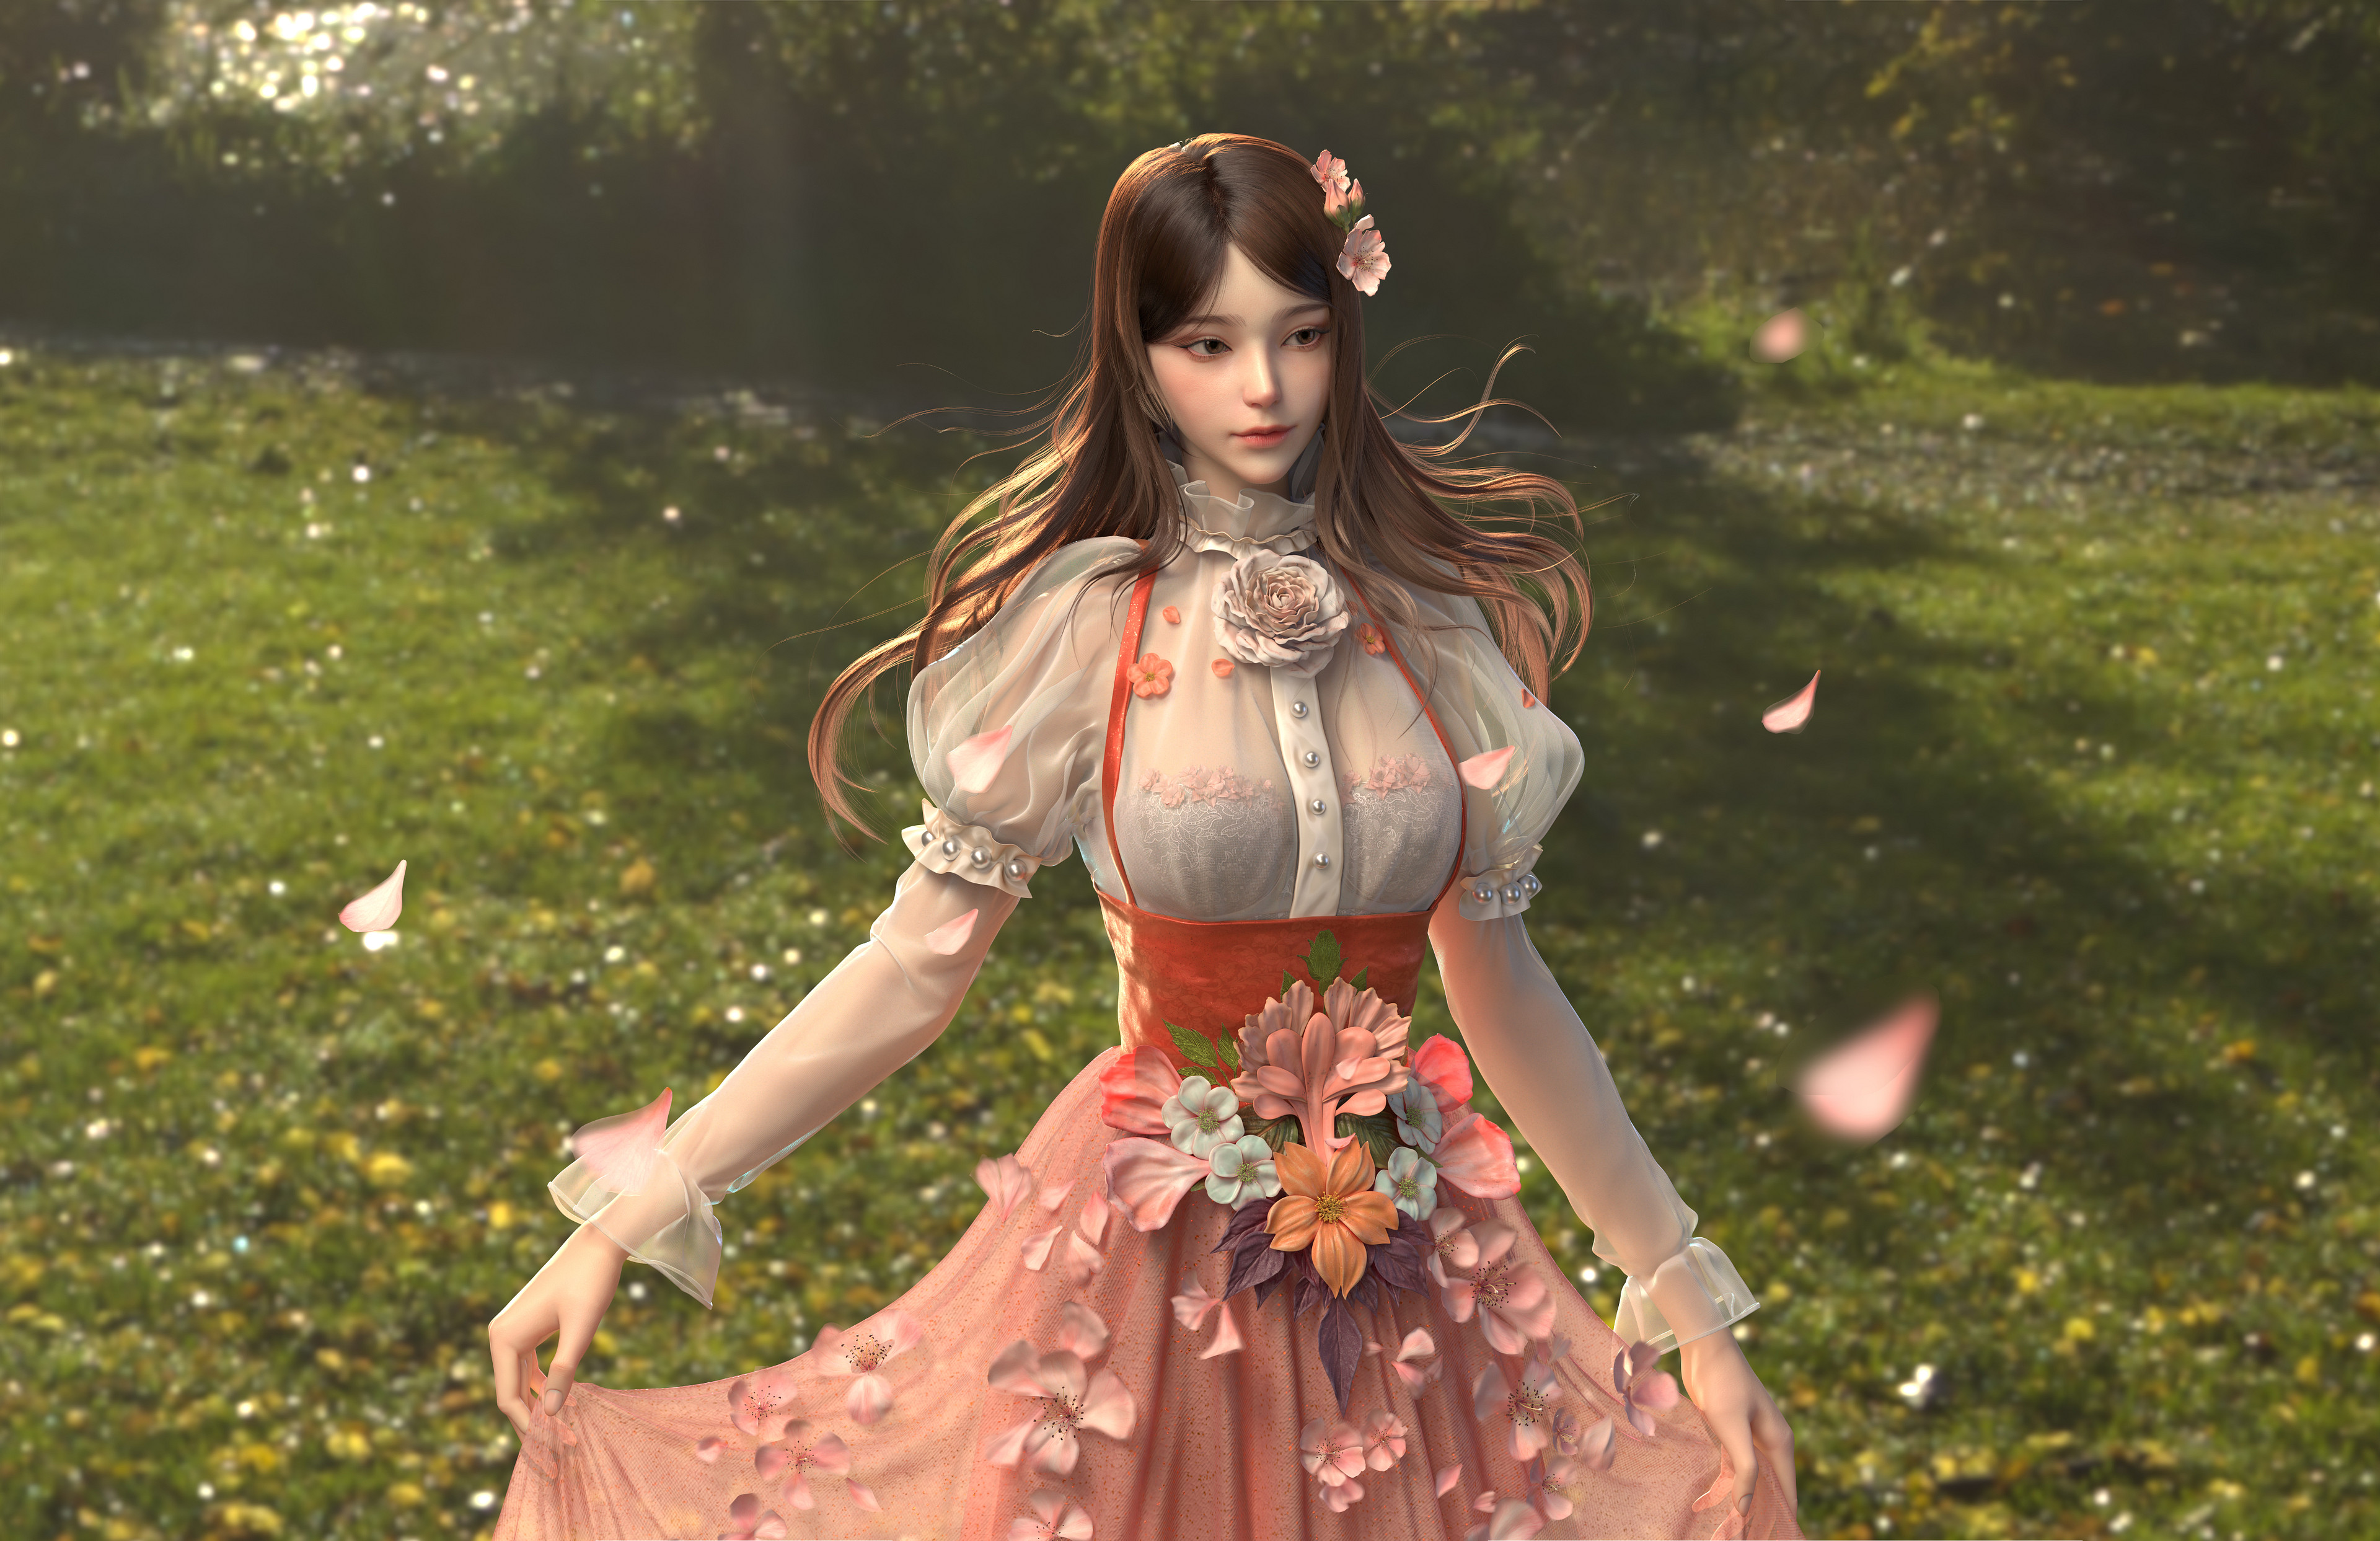 Artwork Digital Art Yangzhengnan Cheng Fantasy Girl Flowers Cherry Blossom Dress 3d Girl 3D Graphics 3840x2486